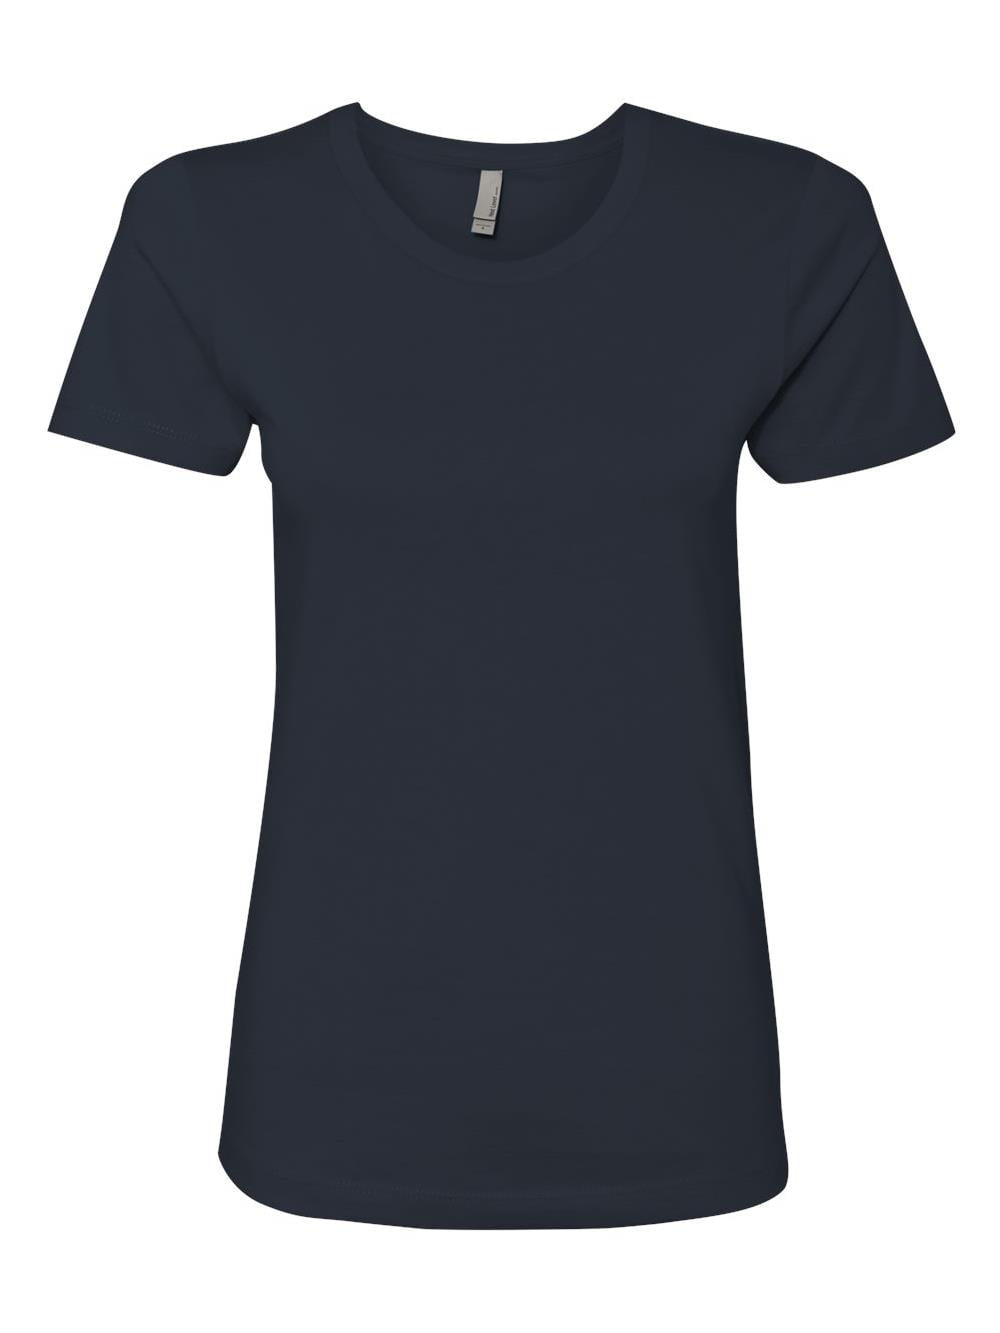 Next Level Apparel - Next Level T-Shirts Women's The Boyfriend Tee 3900 ...